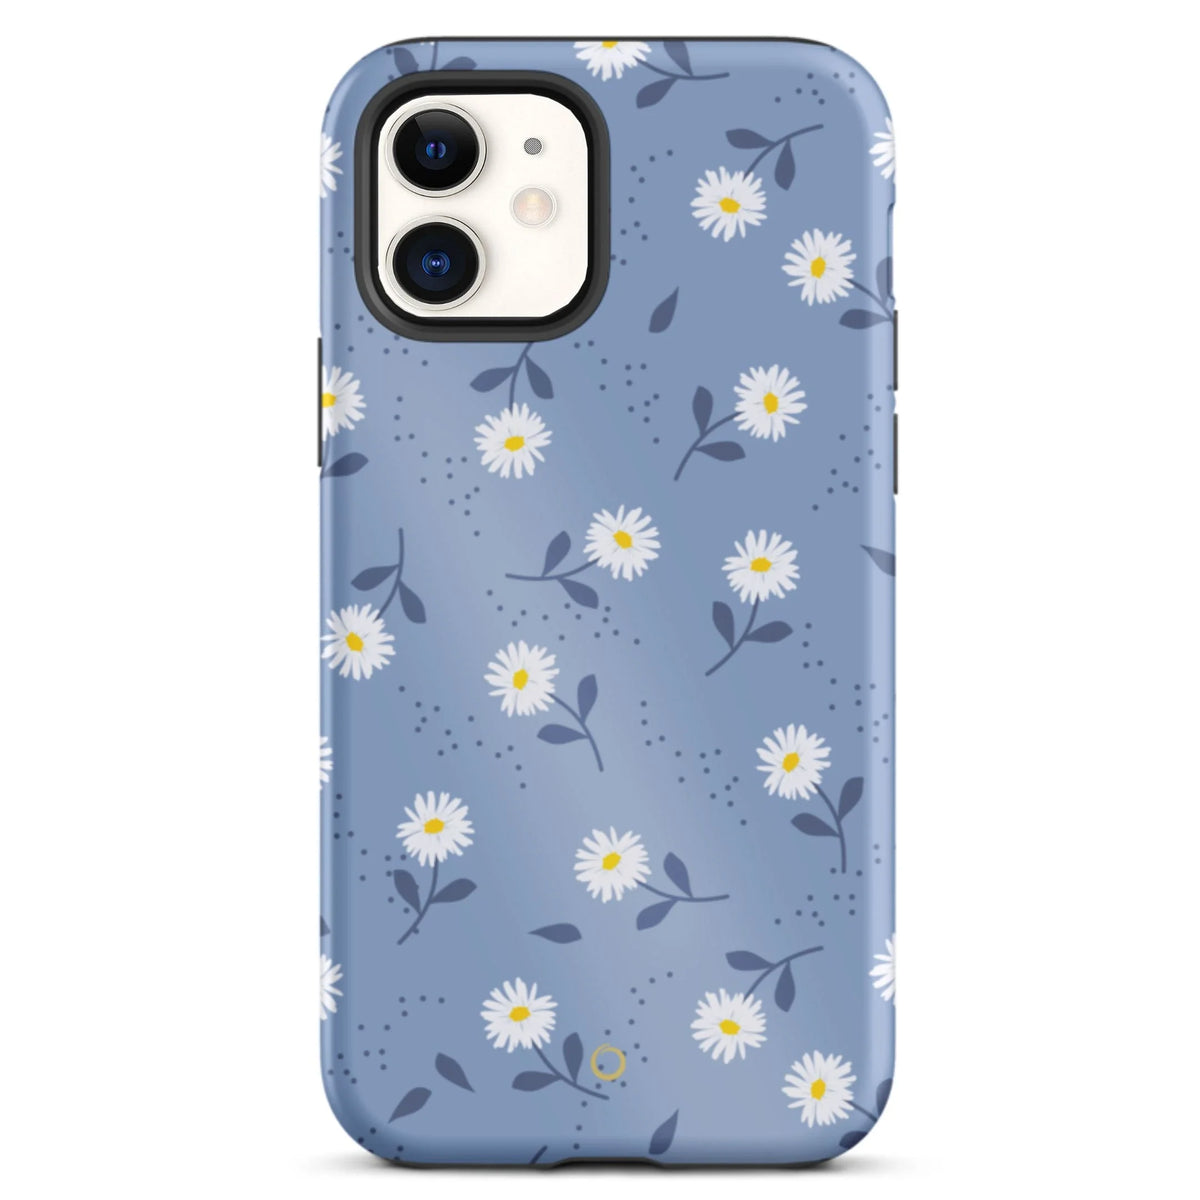 Daisy Dream iPhone Case - iPhone 11